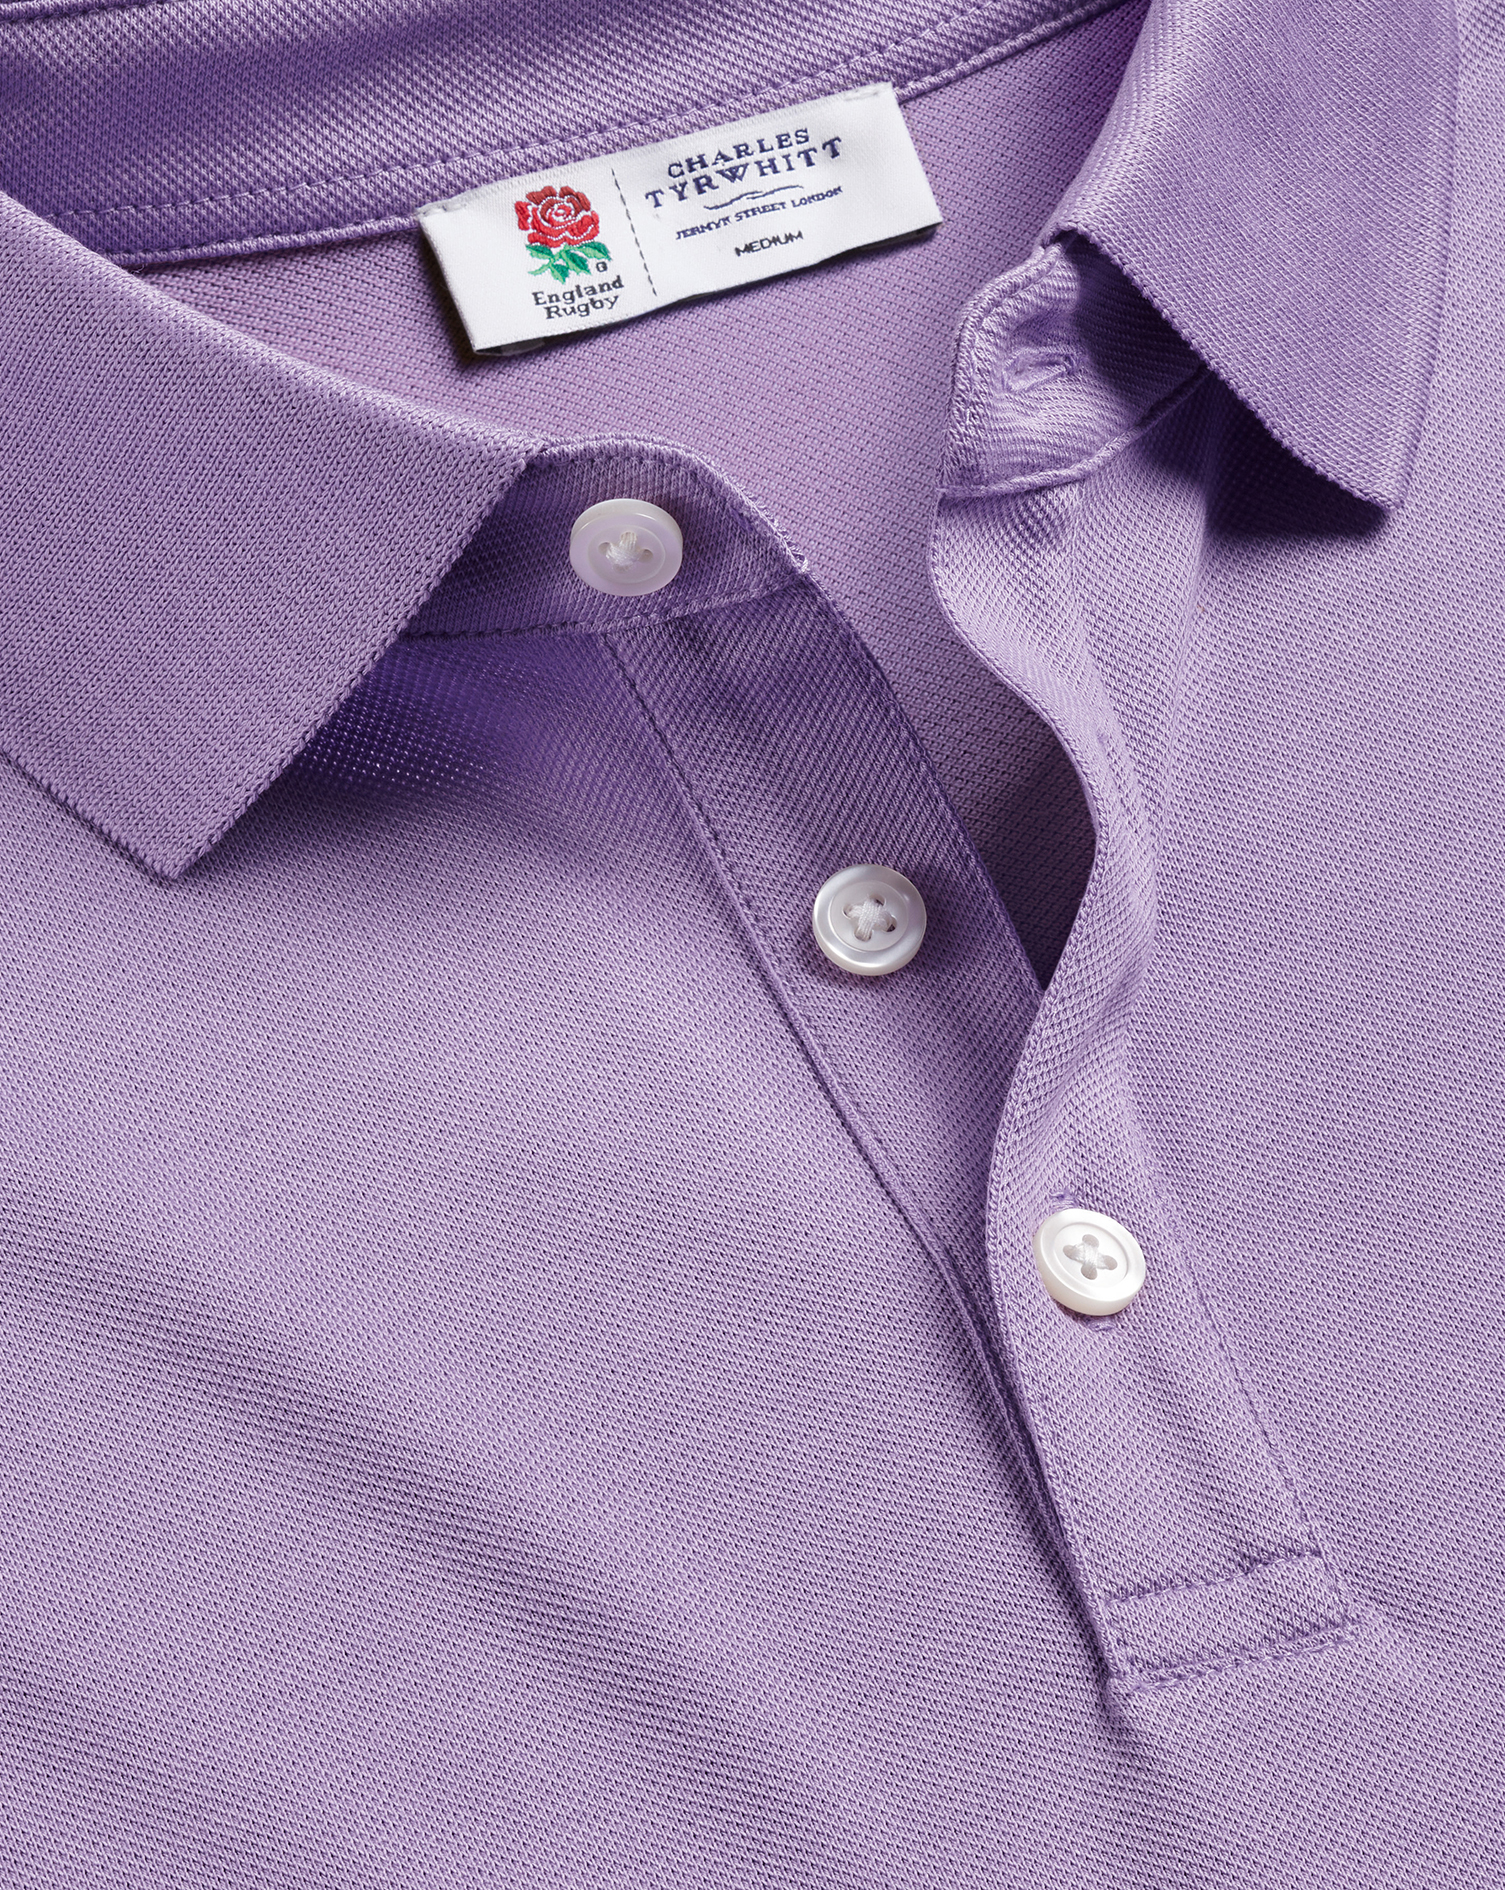 Men's Charles Tyrwhitt England Rugby Pique Polo Shirt - Lilac Purple Size XL Cotton
